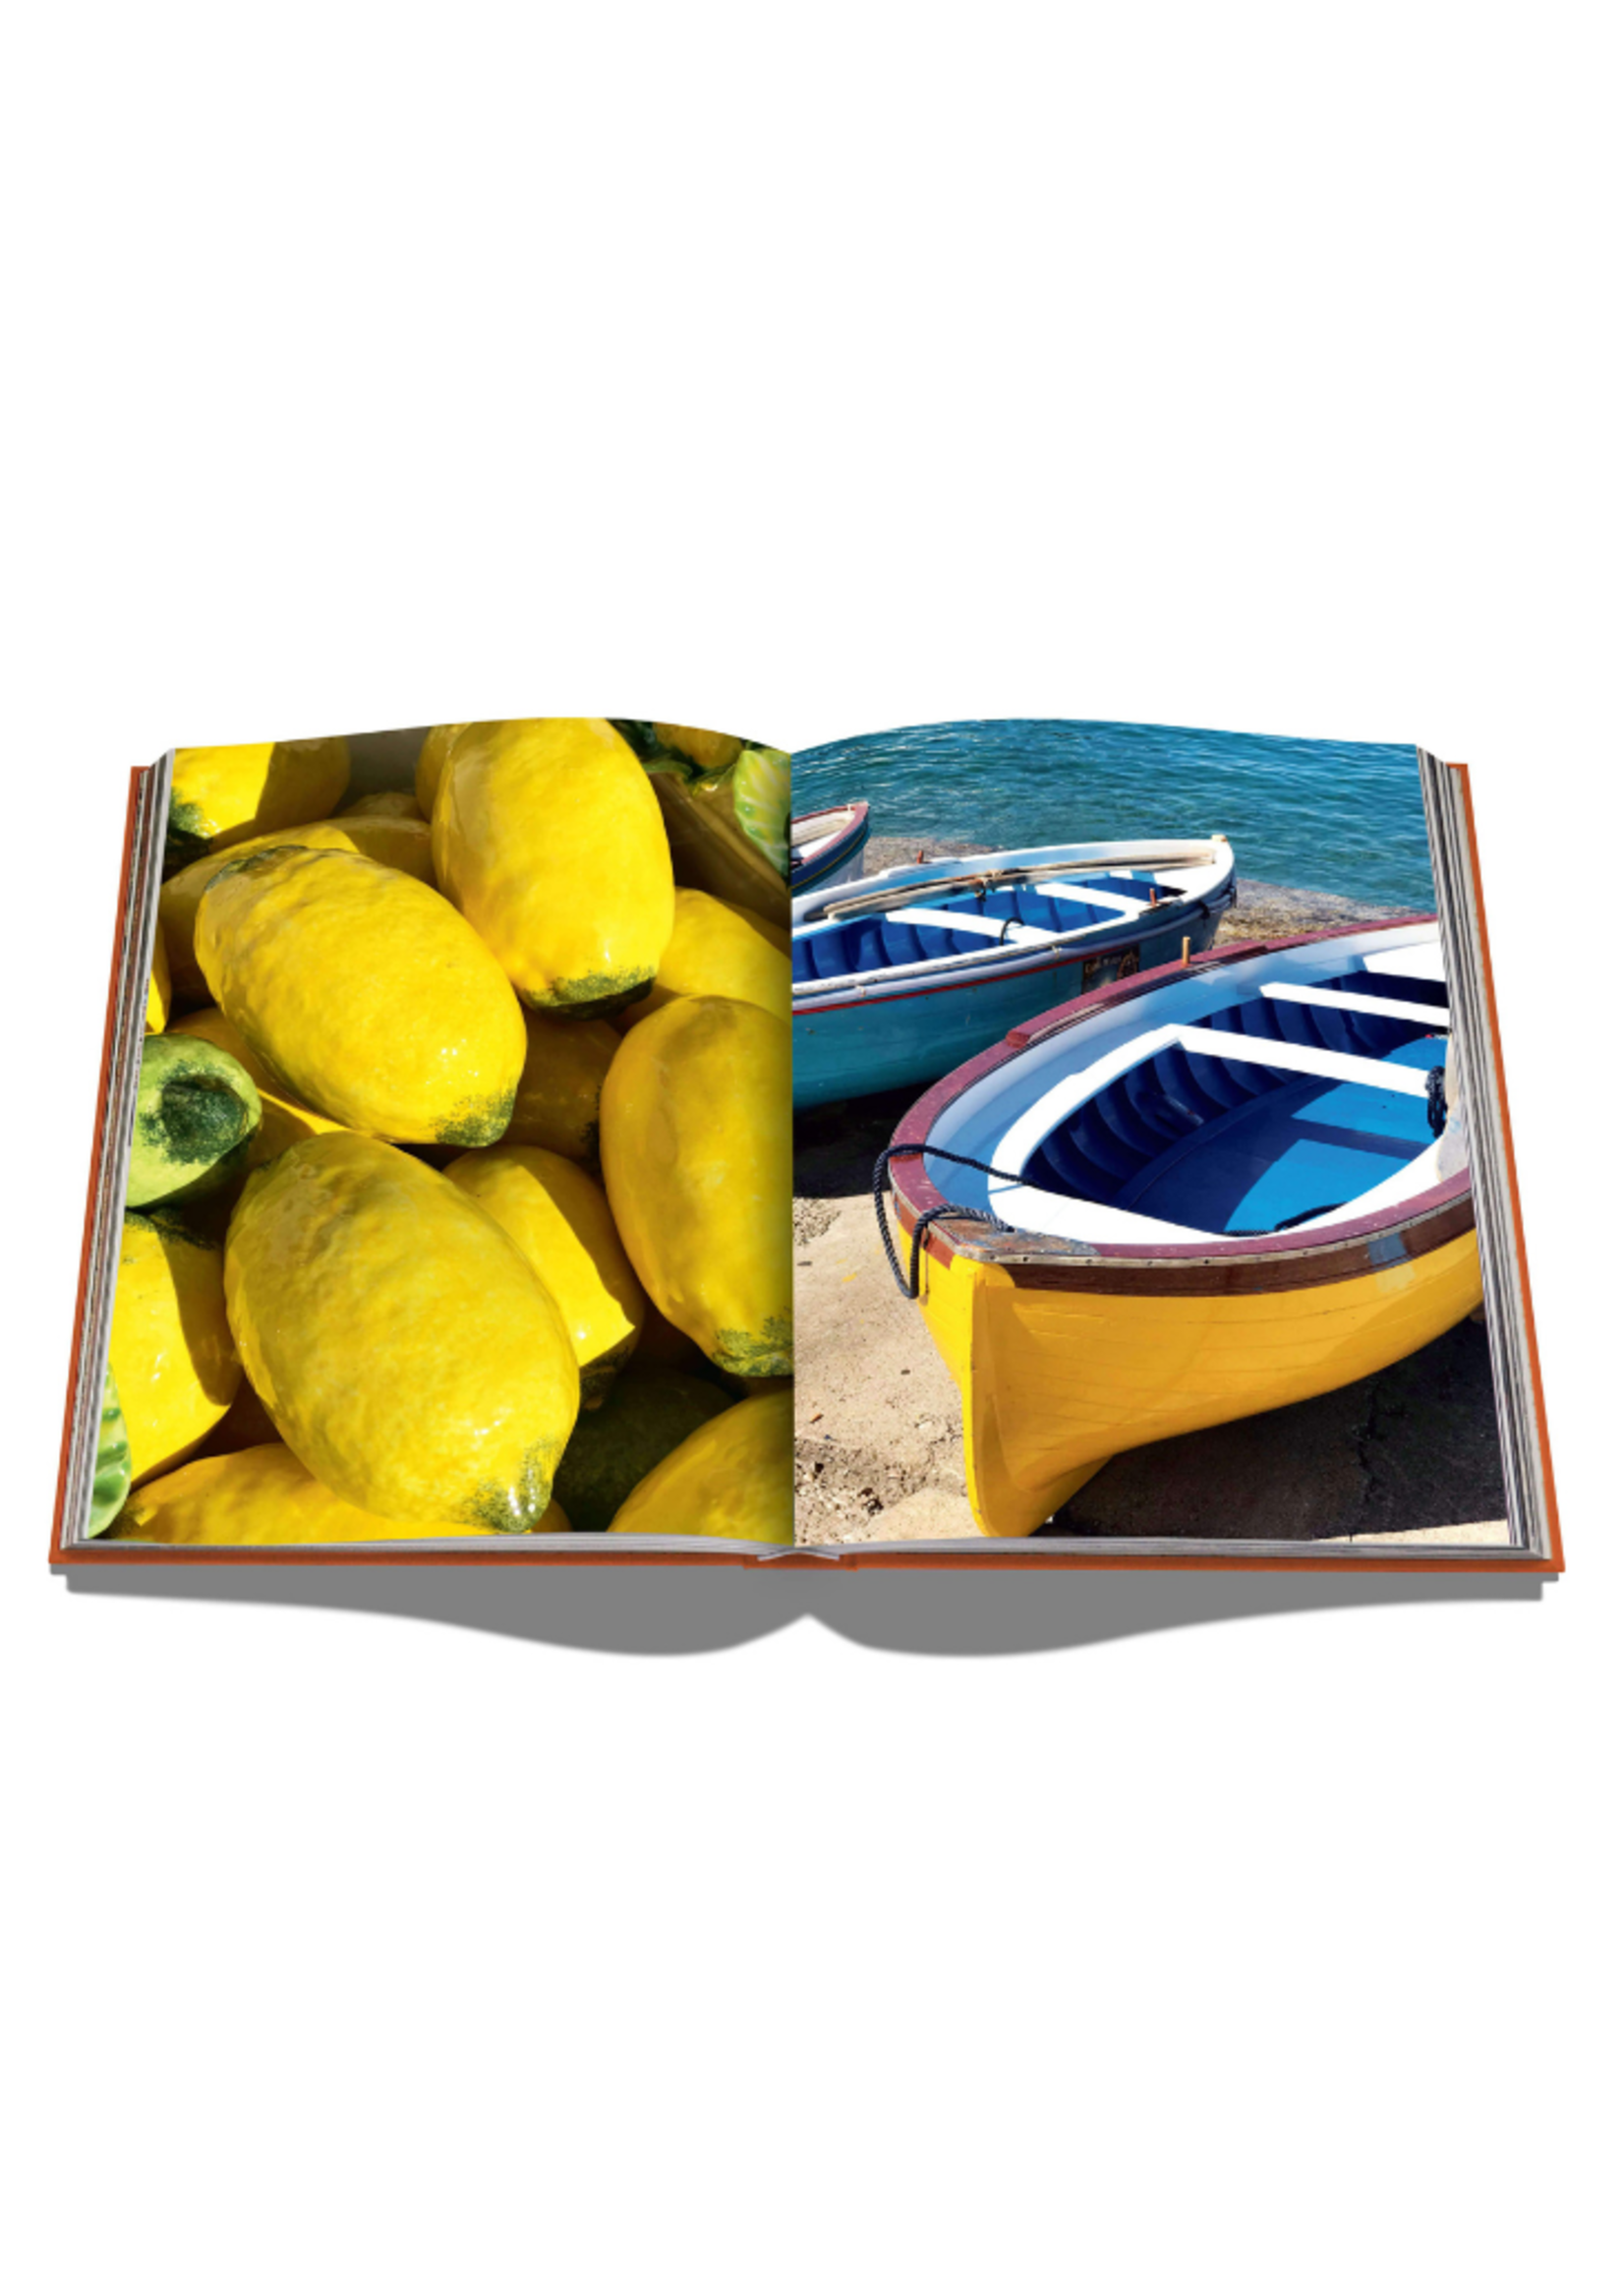 Capri Dolce Vita // Assouline Coffee Table Book